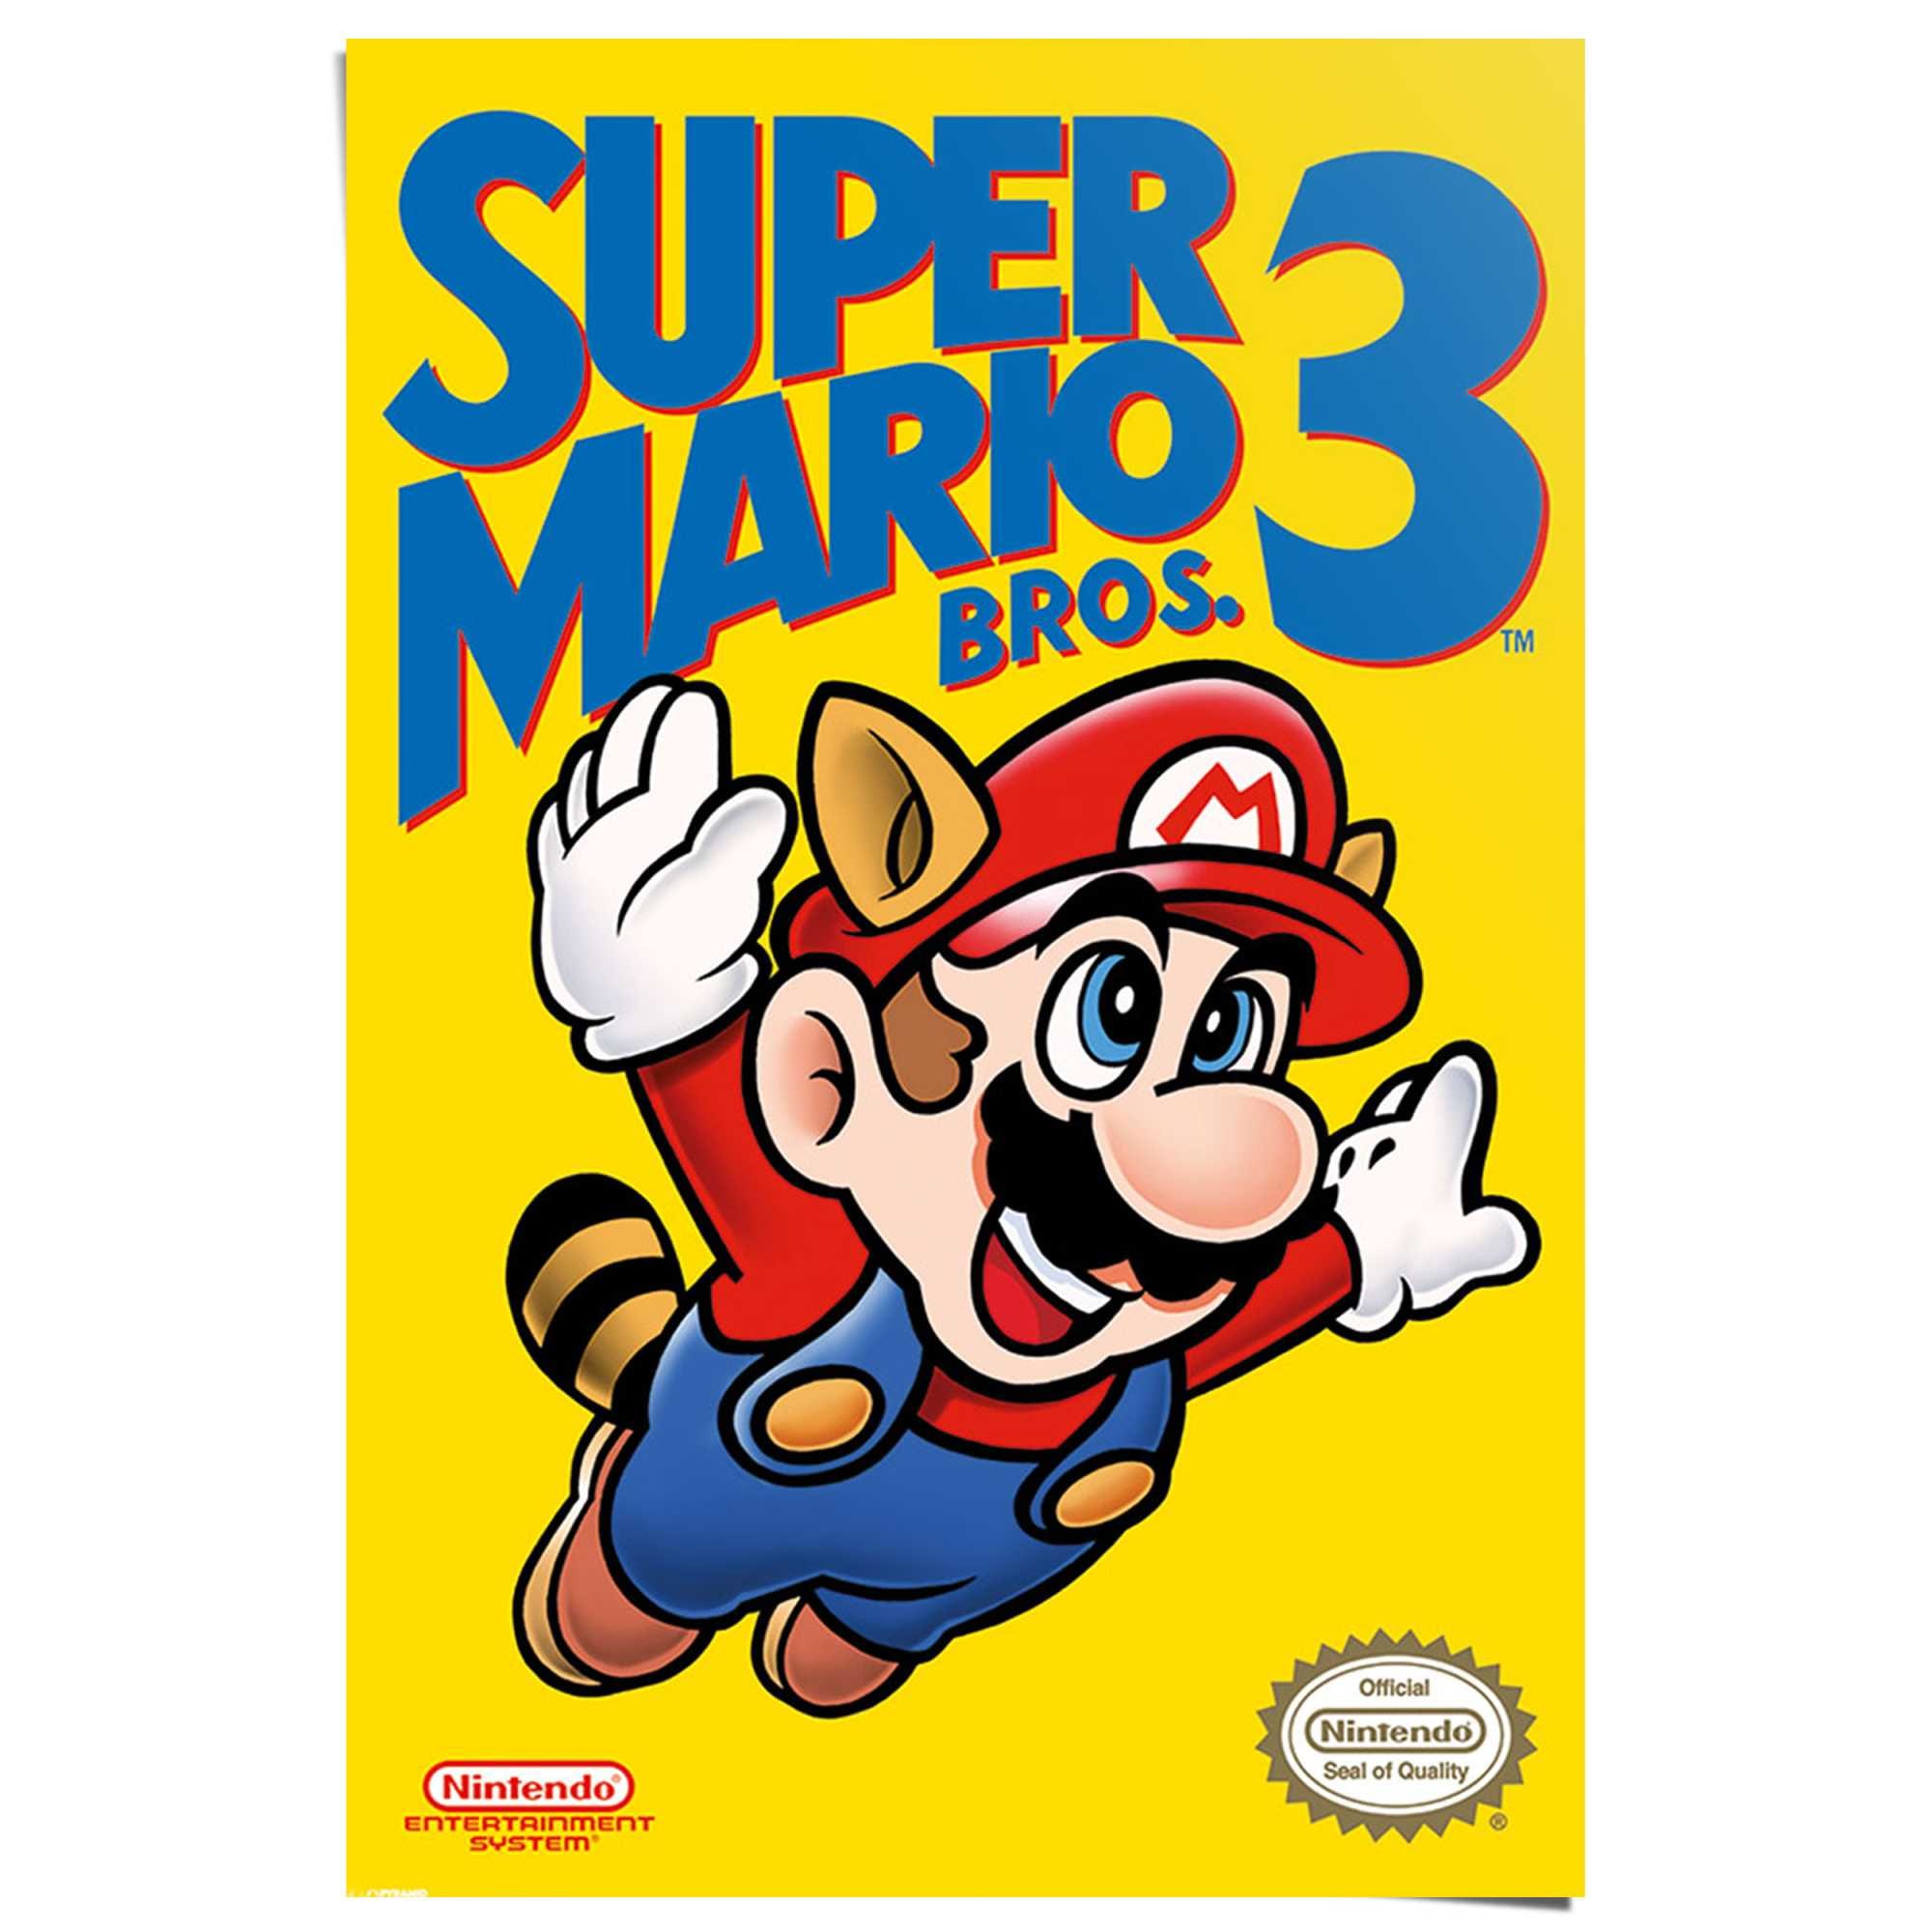 Reinders! Poster »Super Mario Bros 3 - NES cover« bequem kaufen